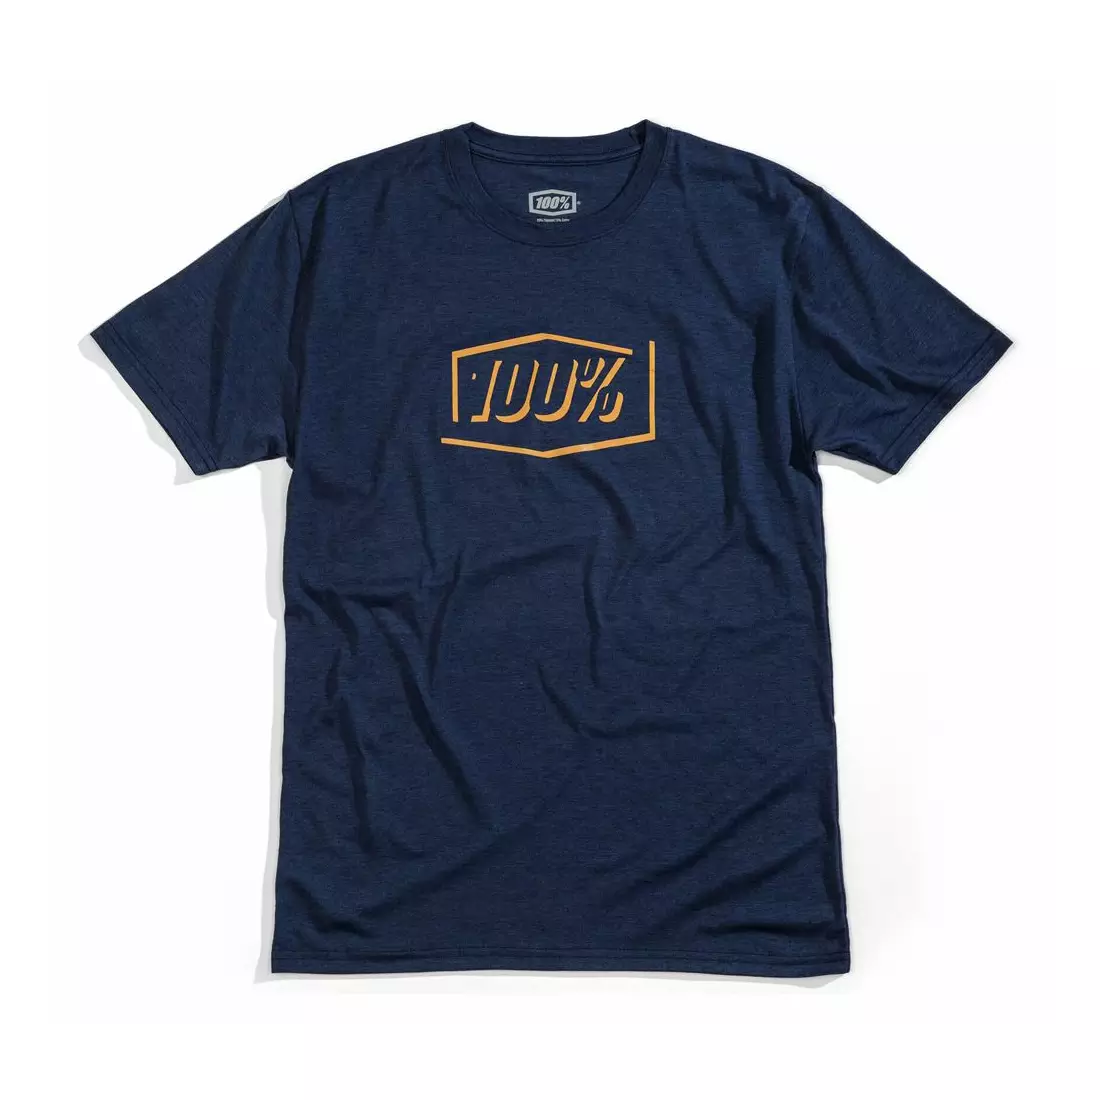 100% Kurzarm-Herrenhemd phantom tech t-shirt navy heather STO-35013-015-10